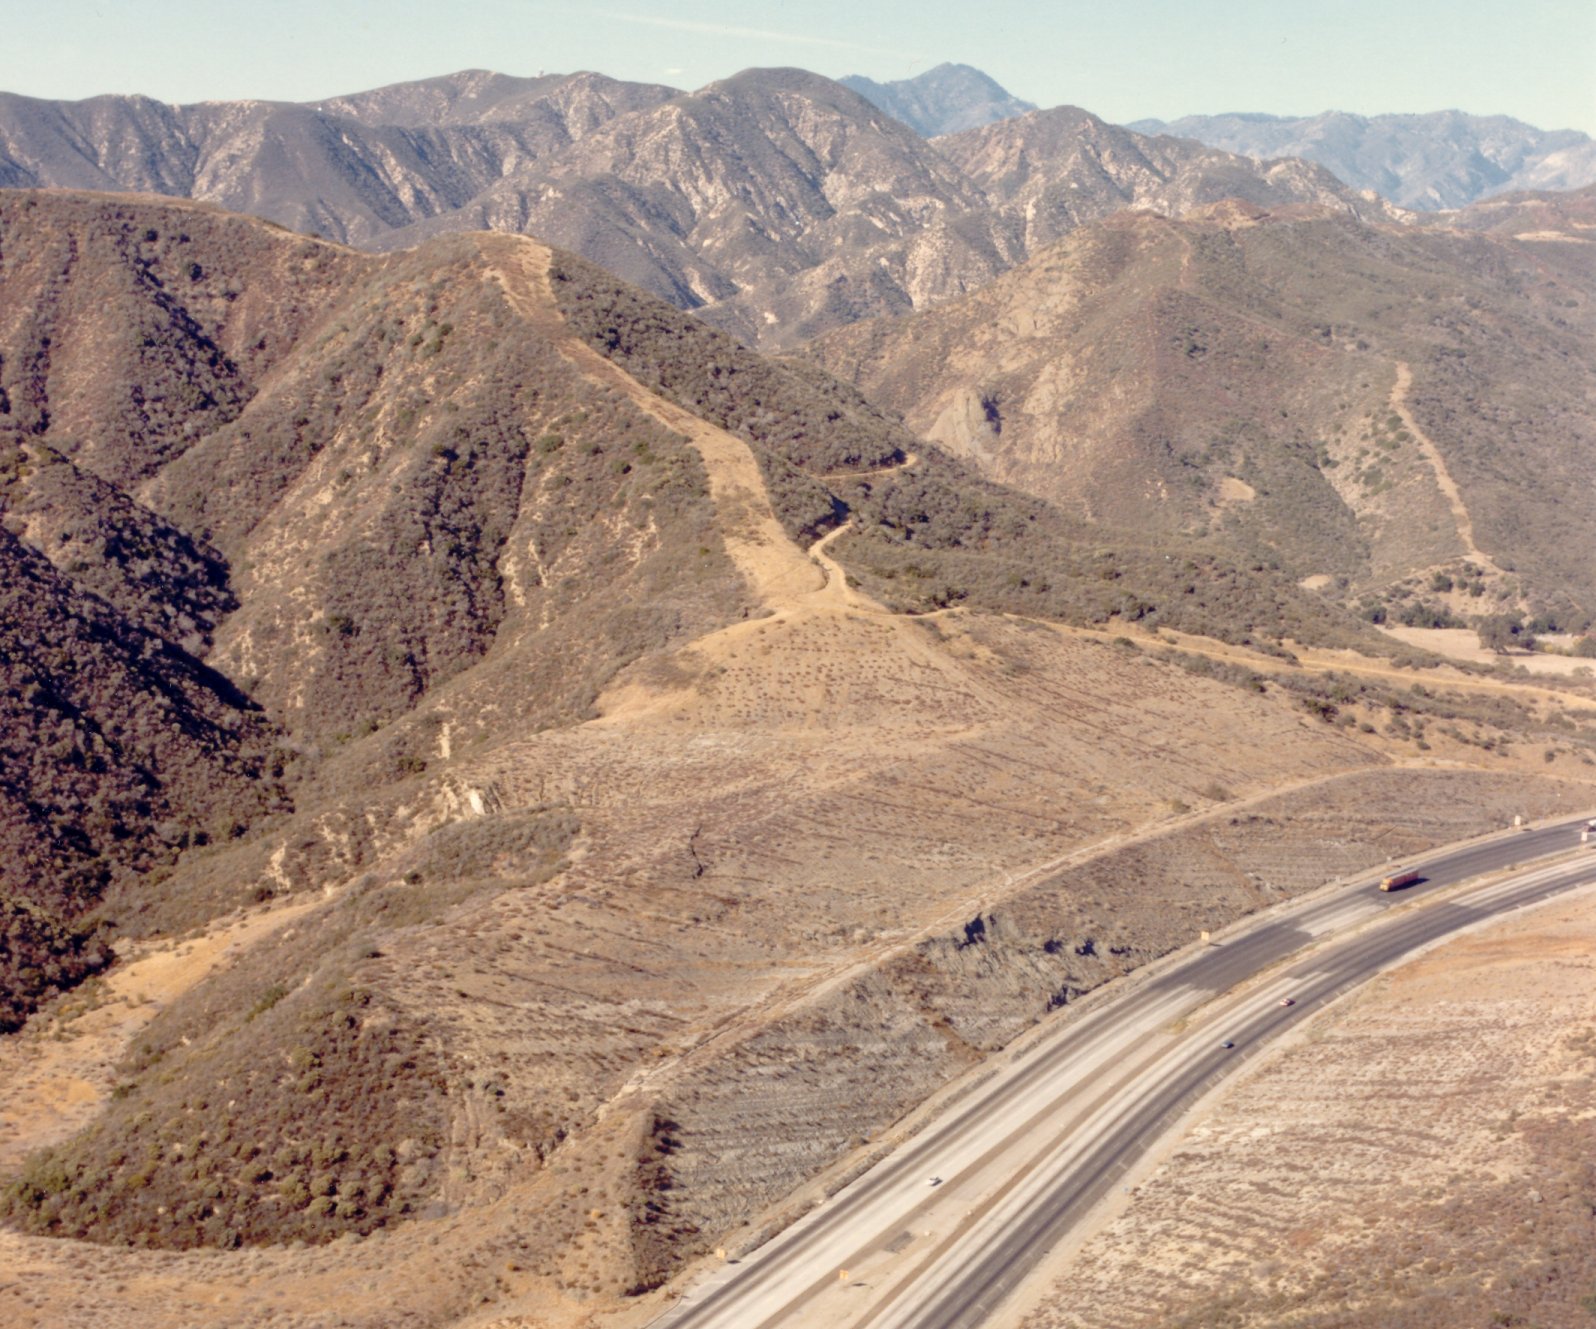 Interstate 5 traverses ruggen barren terrain in northern Los Angeles county.